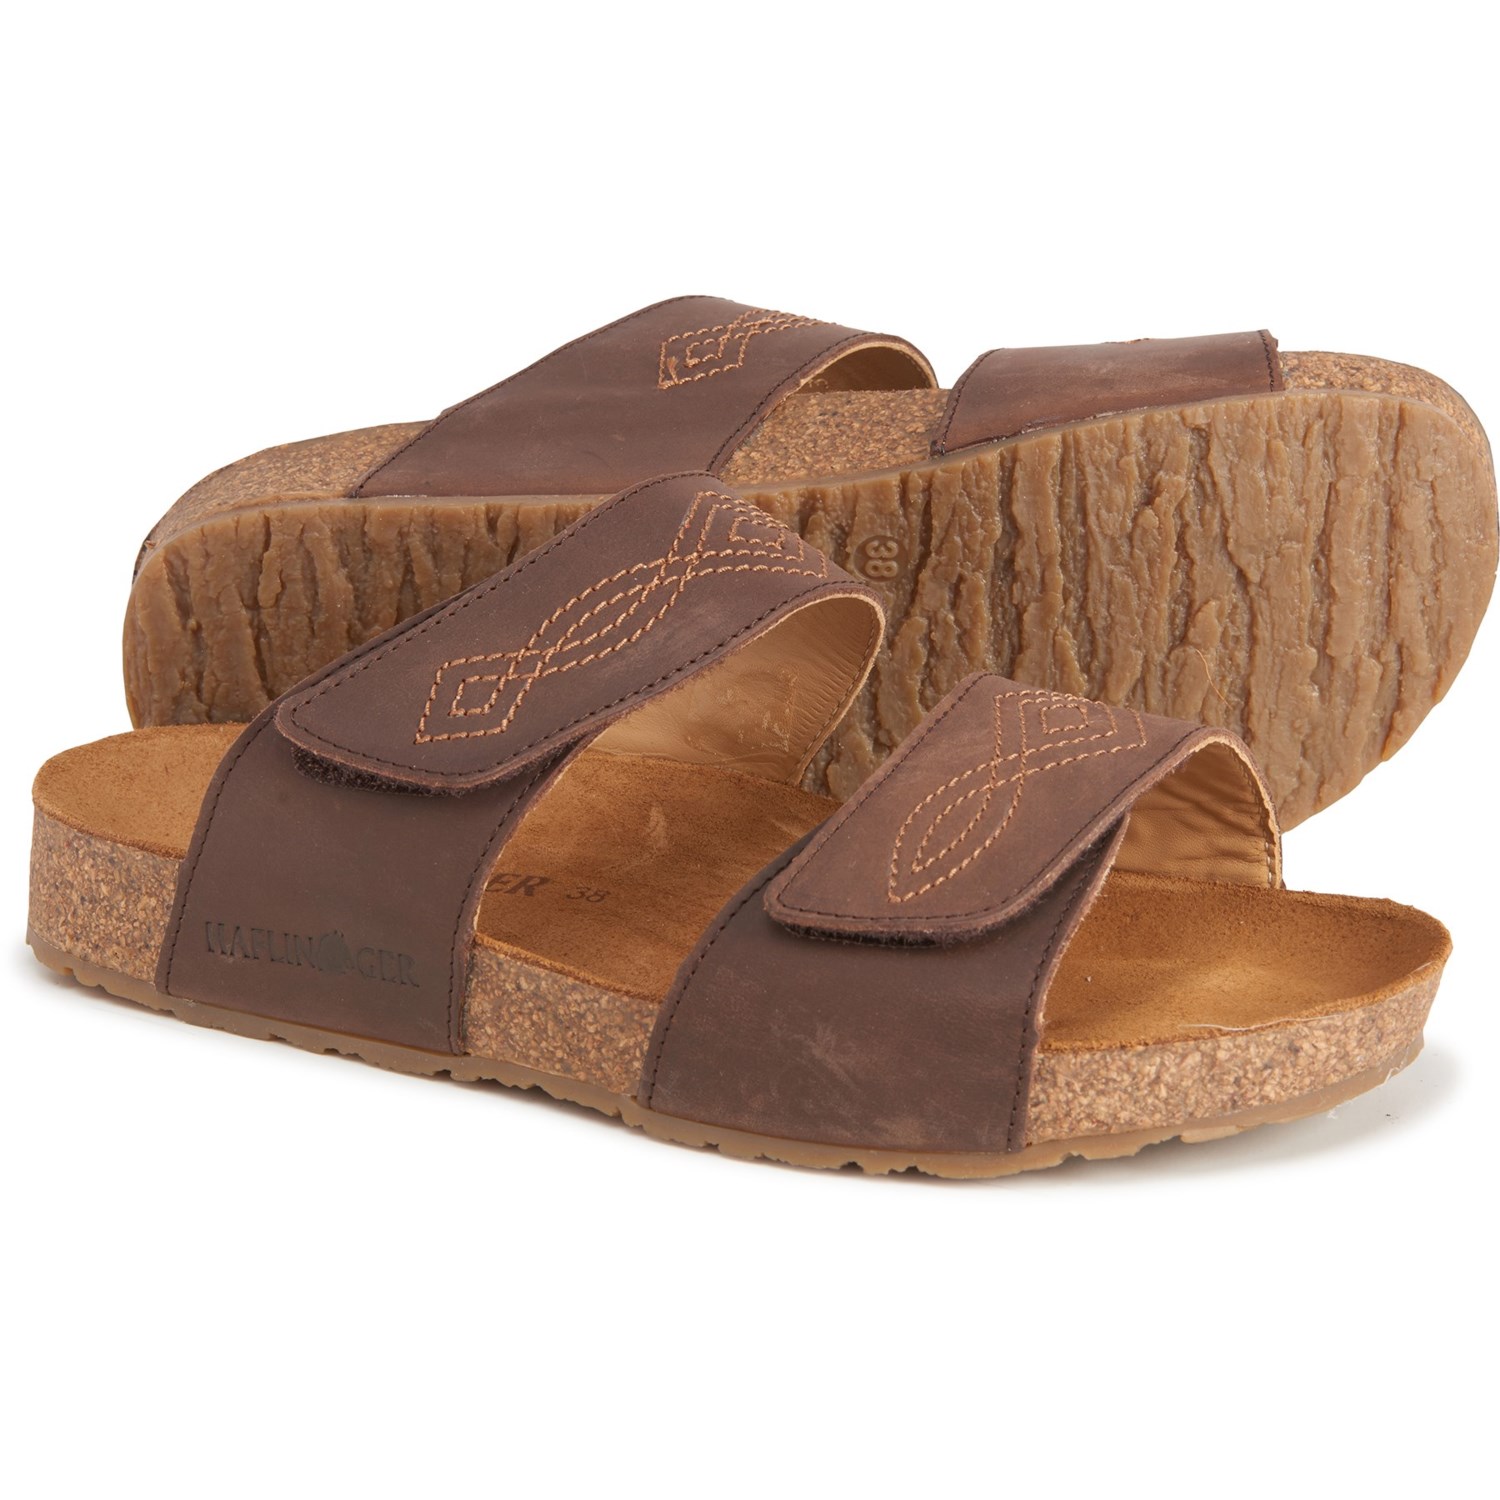 haflinger women's sandals